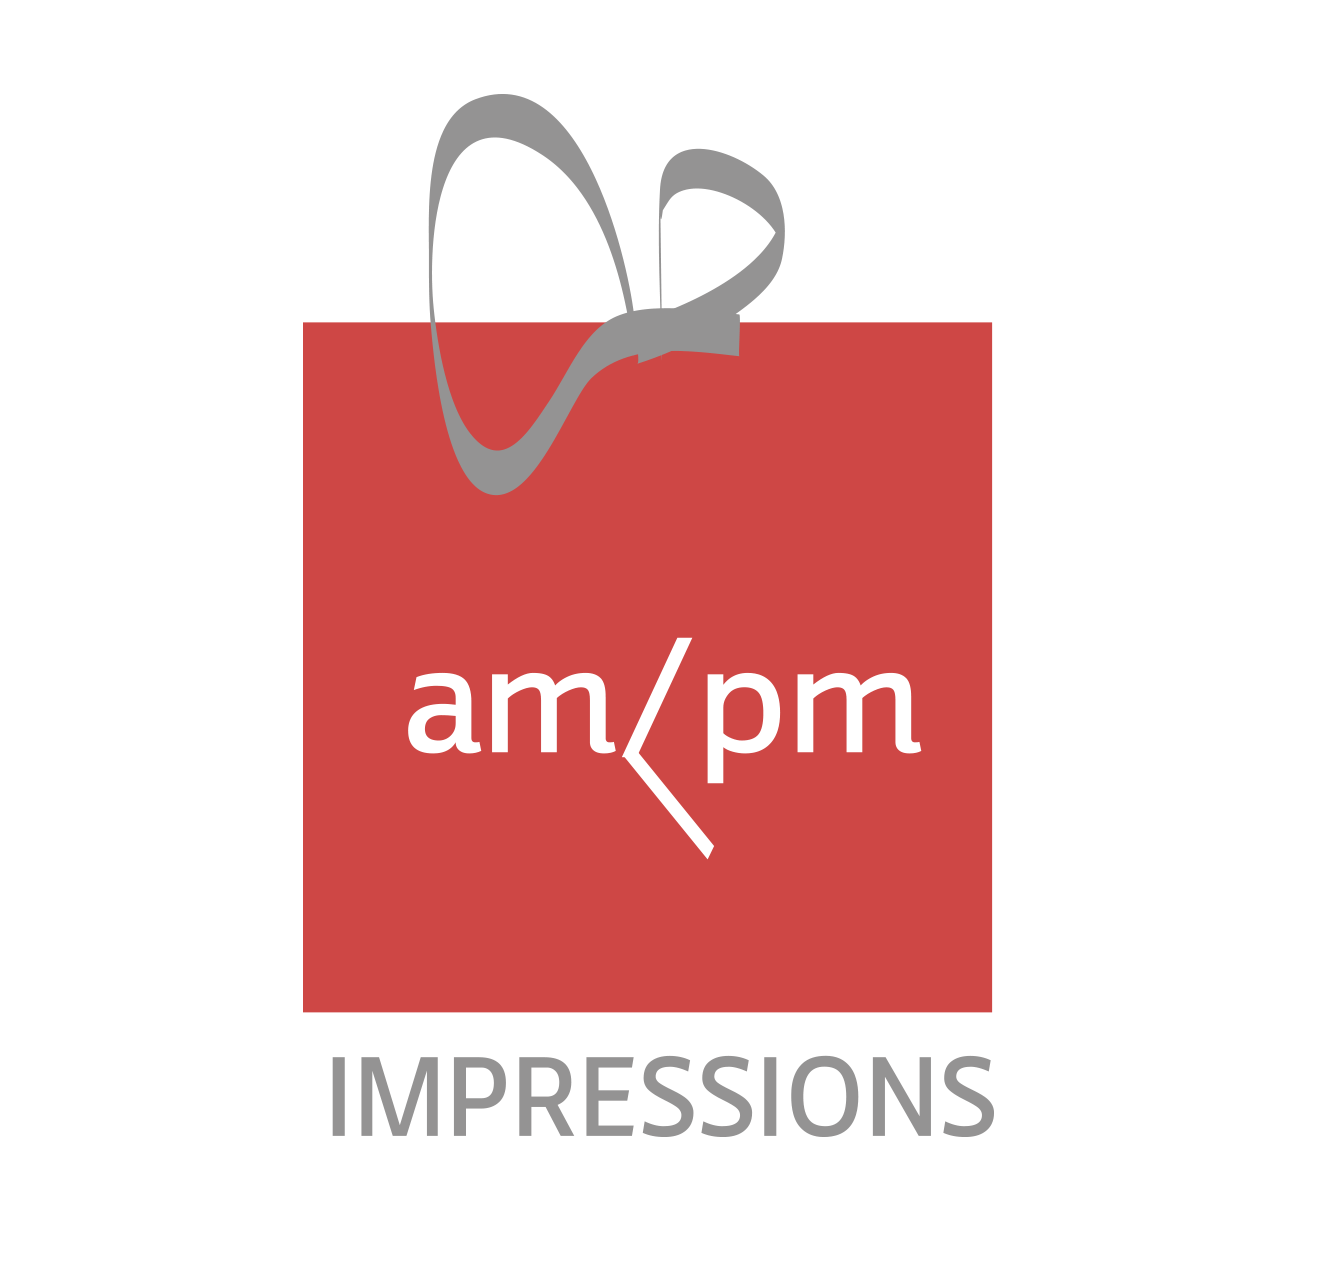 am pm impressions logo design 01 momenarts